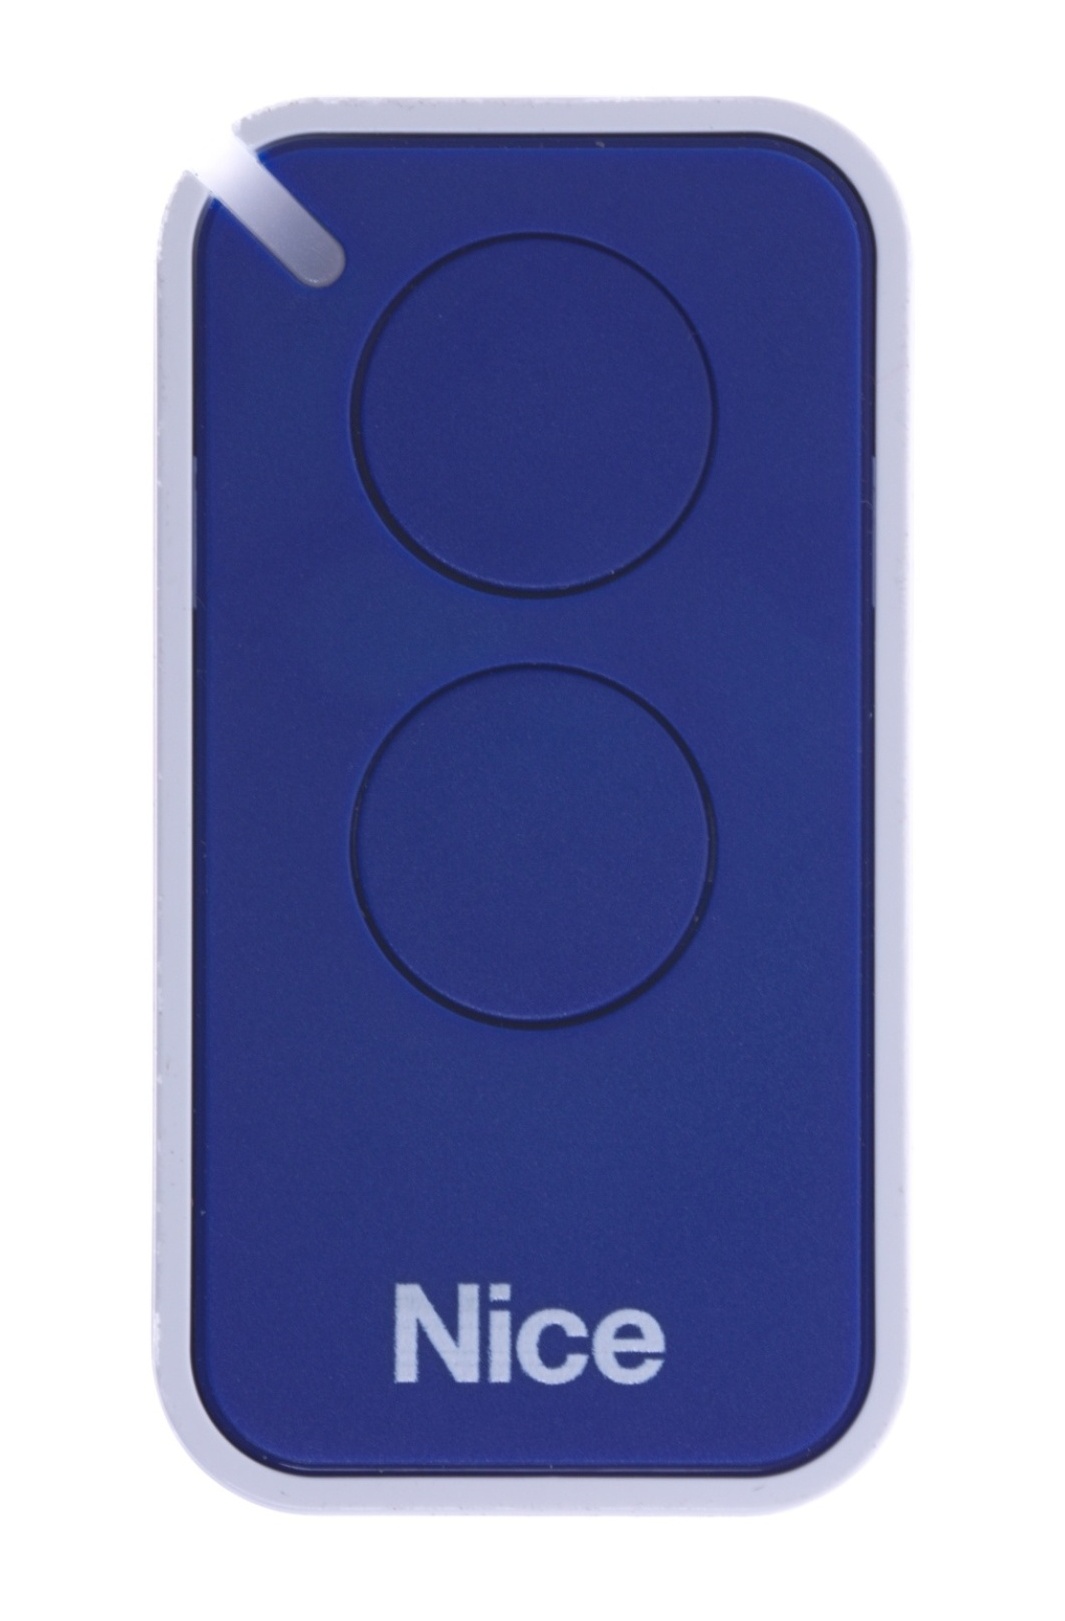 Ovladač INTI 2, modrý, dvoukanálový, Nice INTI2B